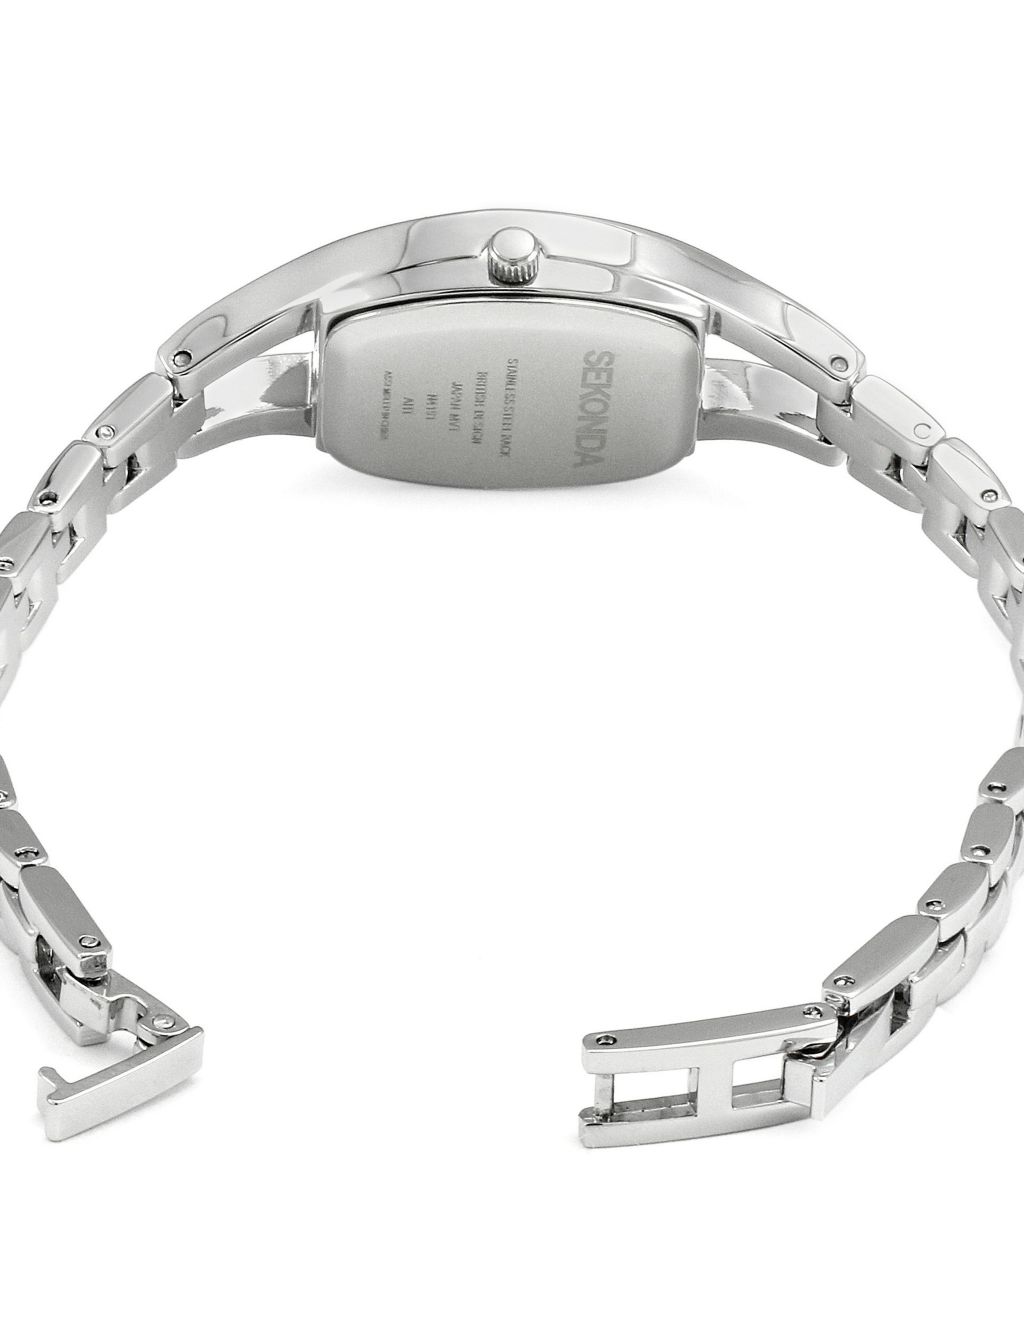 Sekonda Dress Tonneau Silver Watch image 4